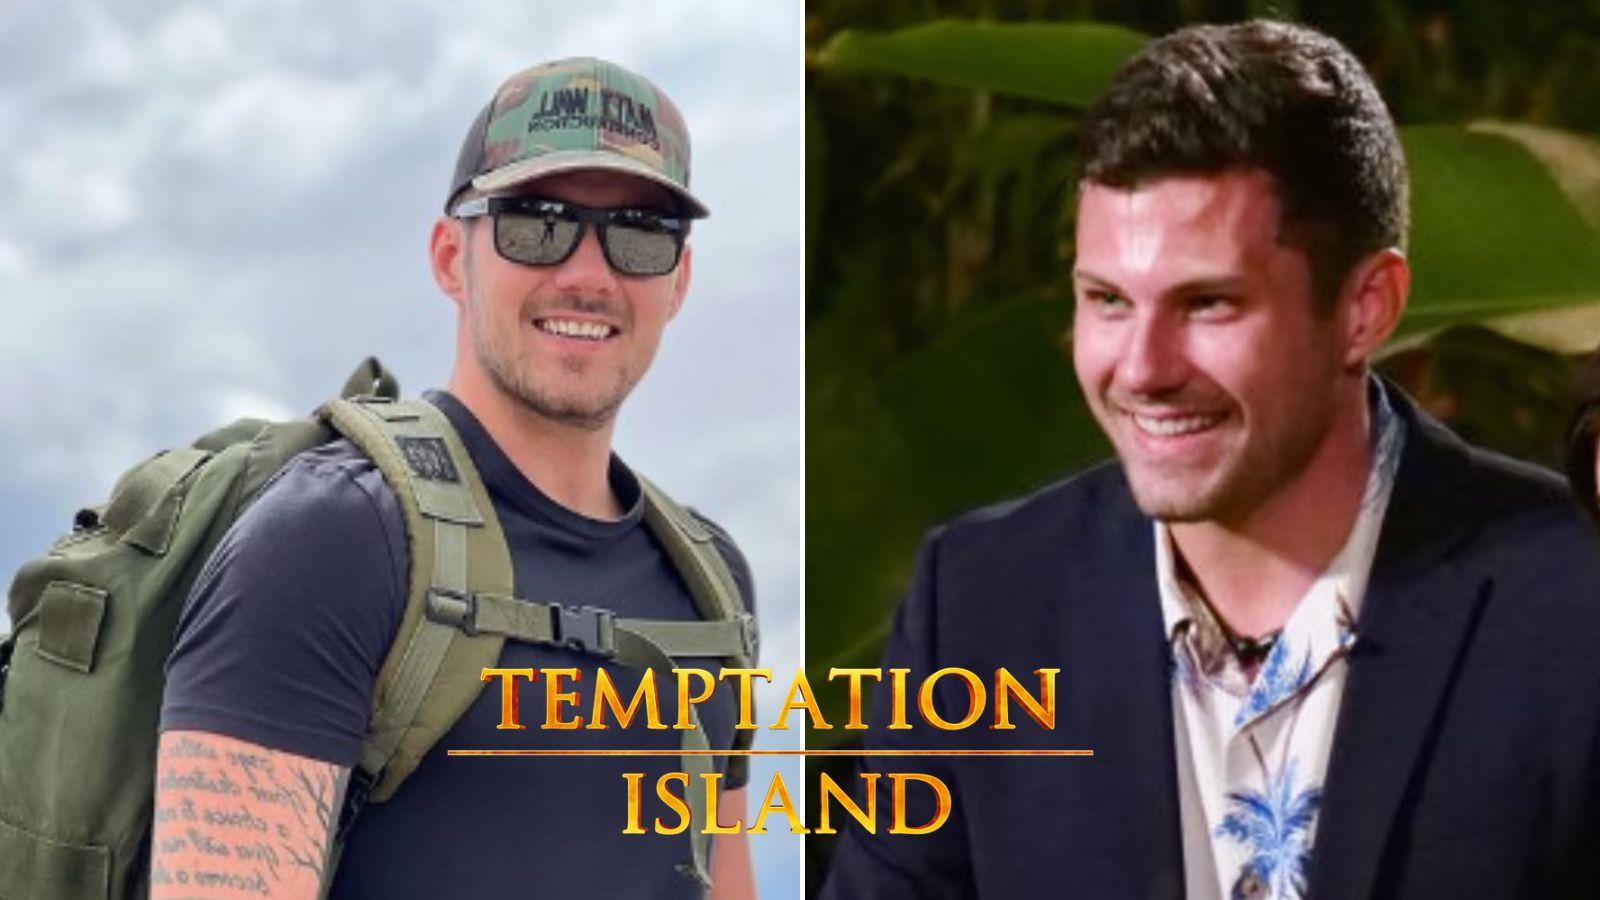 Ben Knobloch from Temptation Island